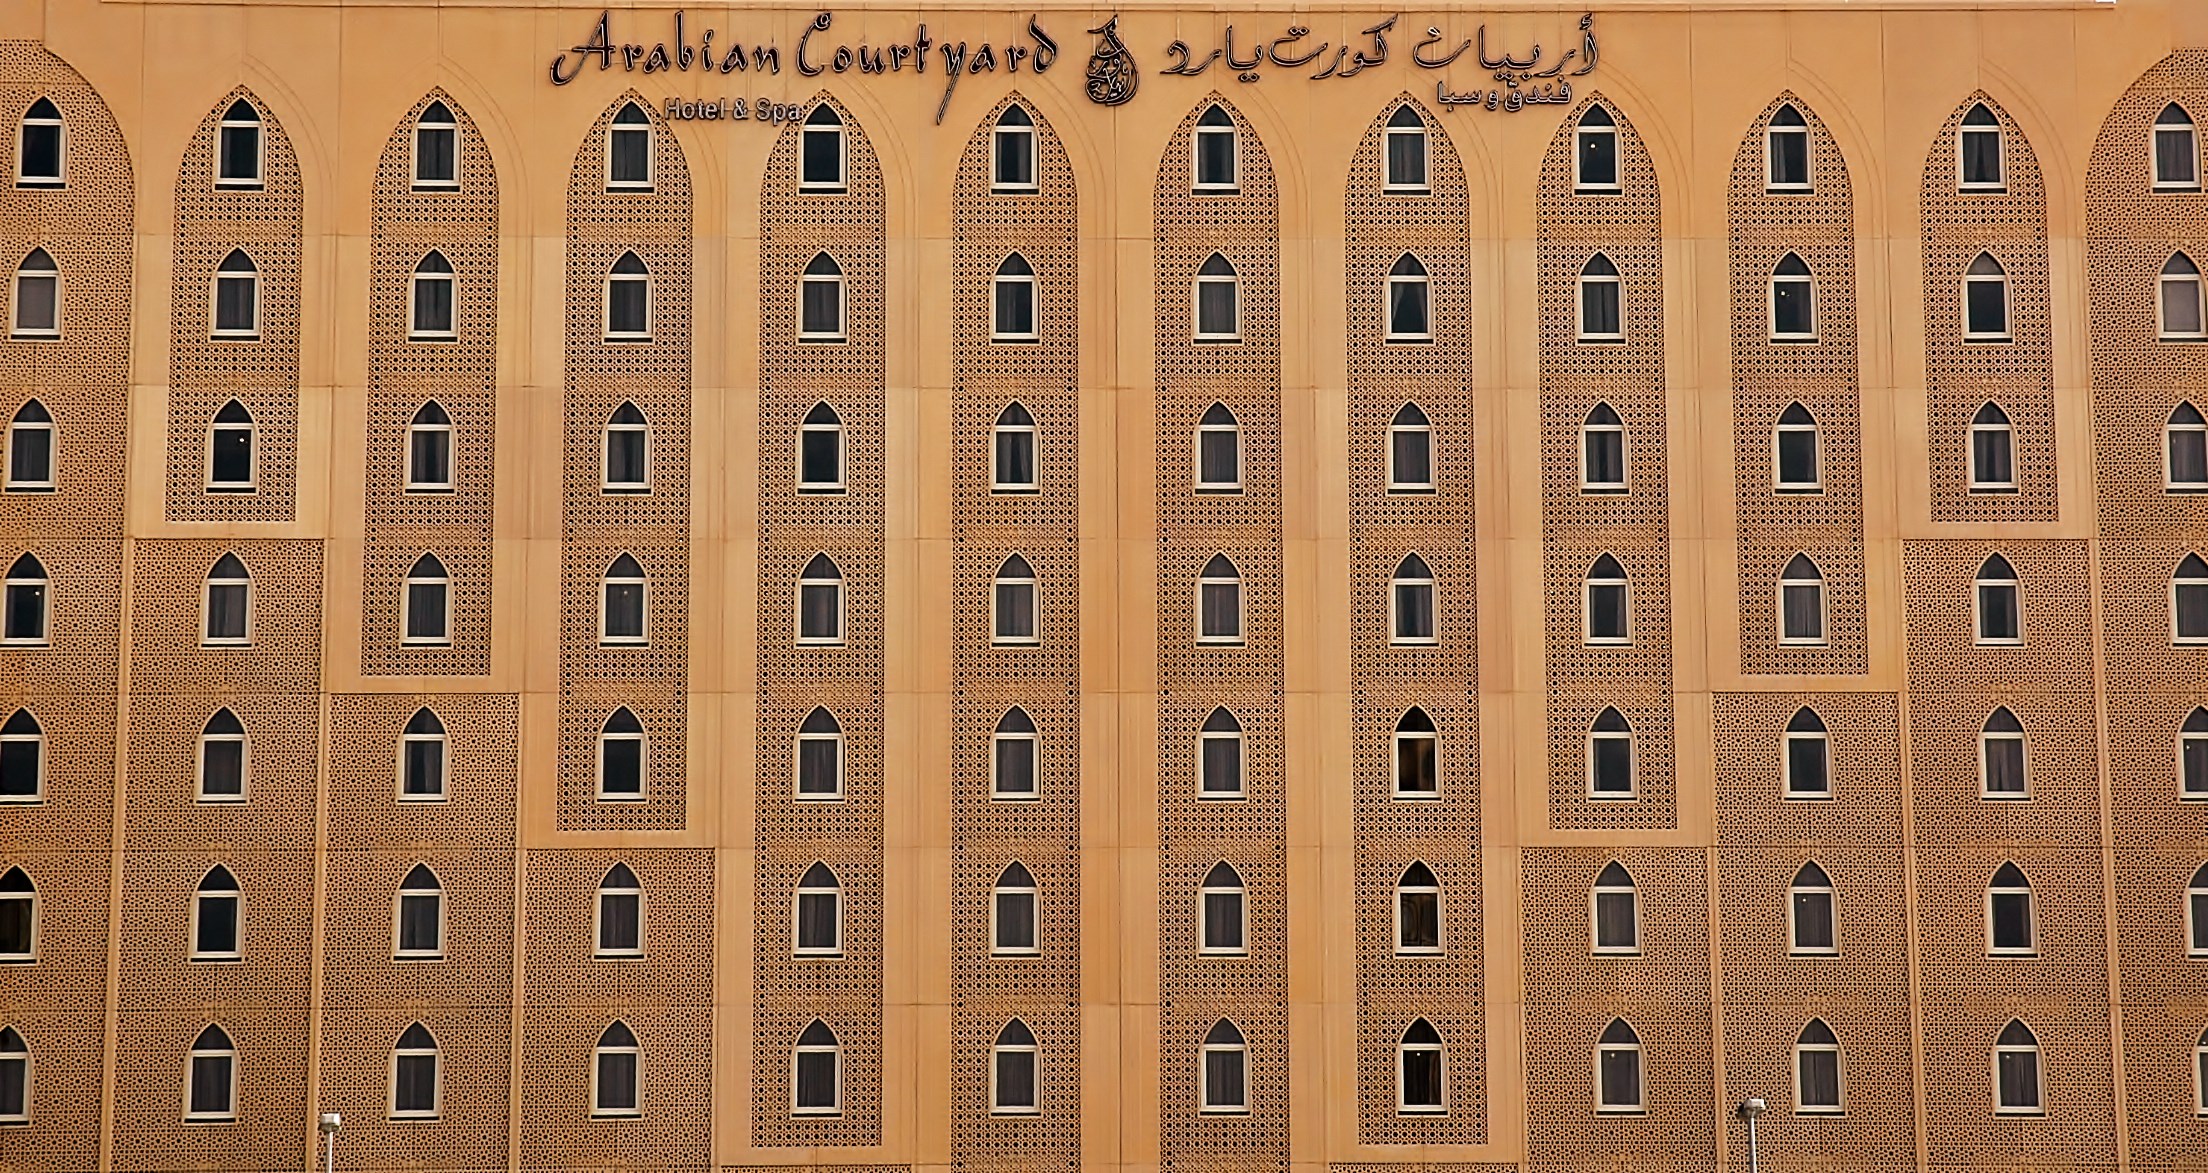 Arabian court yard (Hotel and spa).